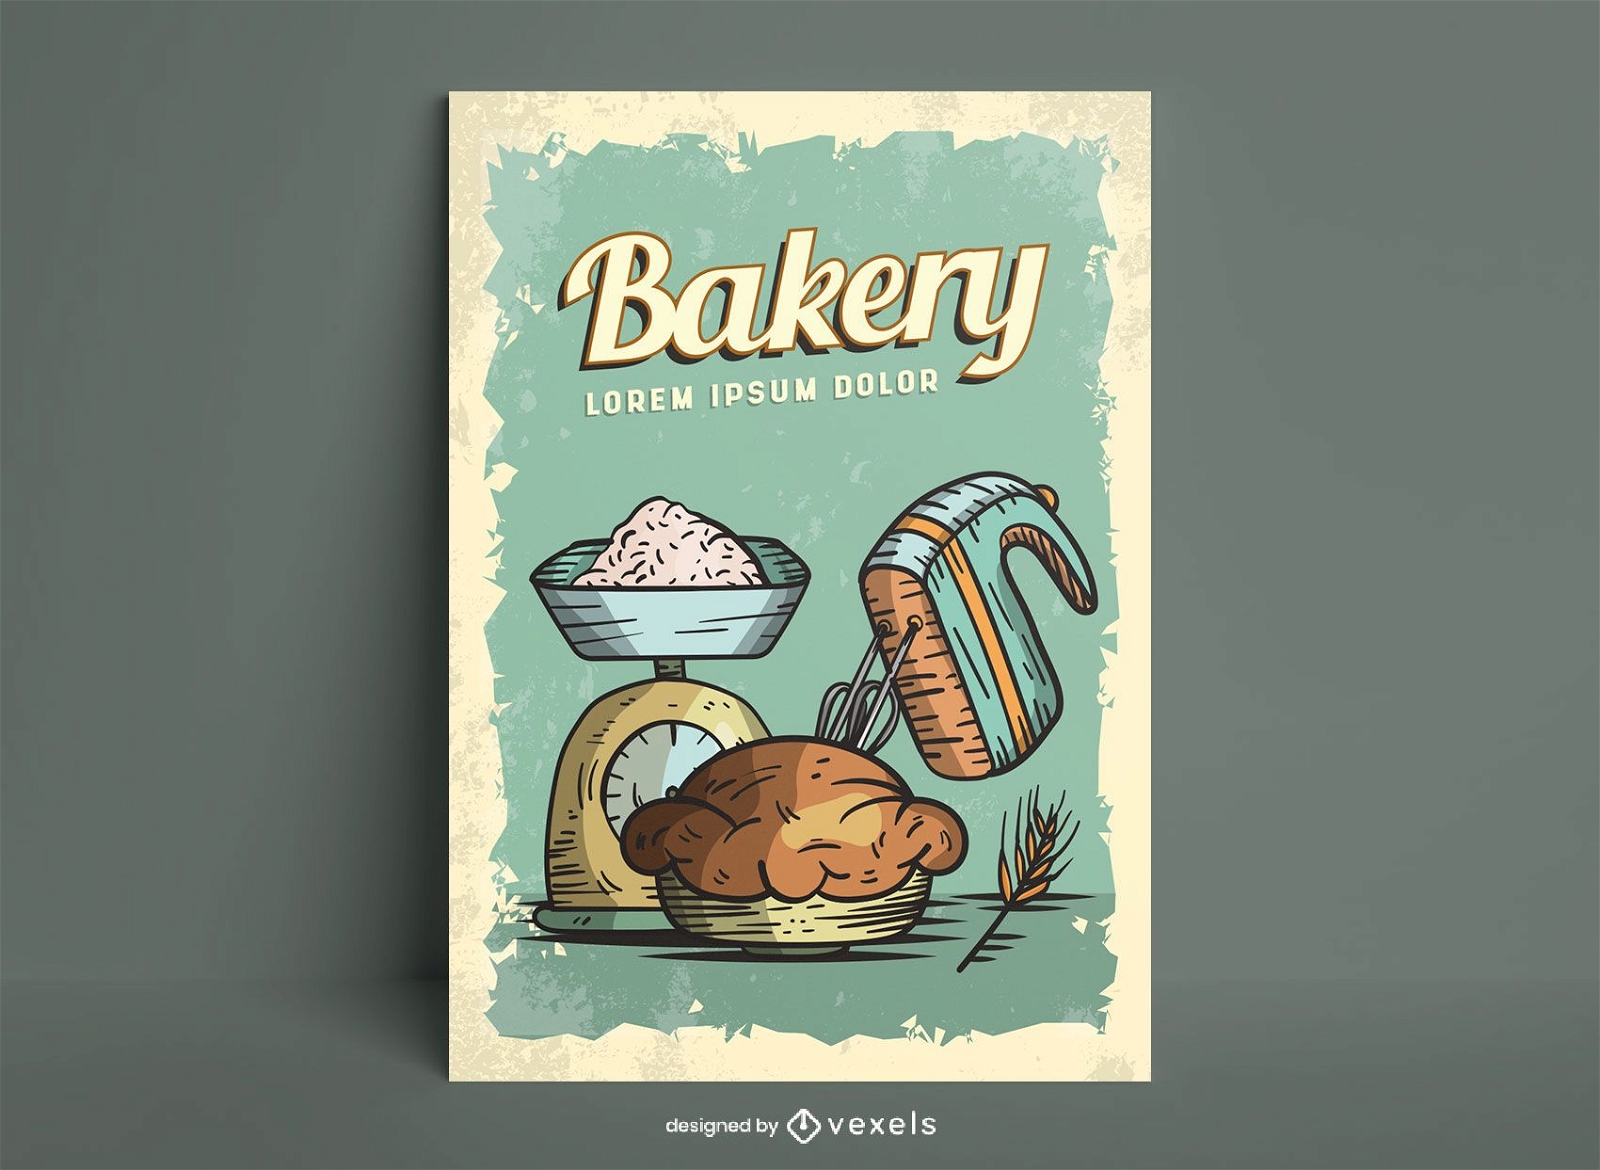 Bakery sweet food illustration poster design